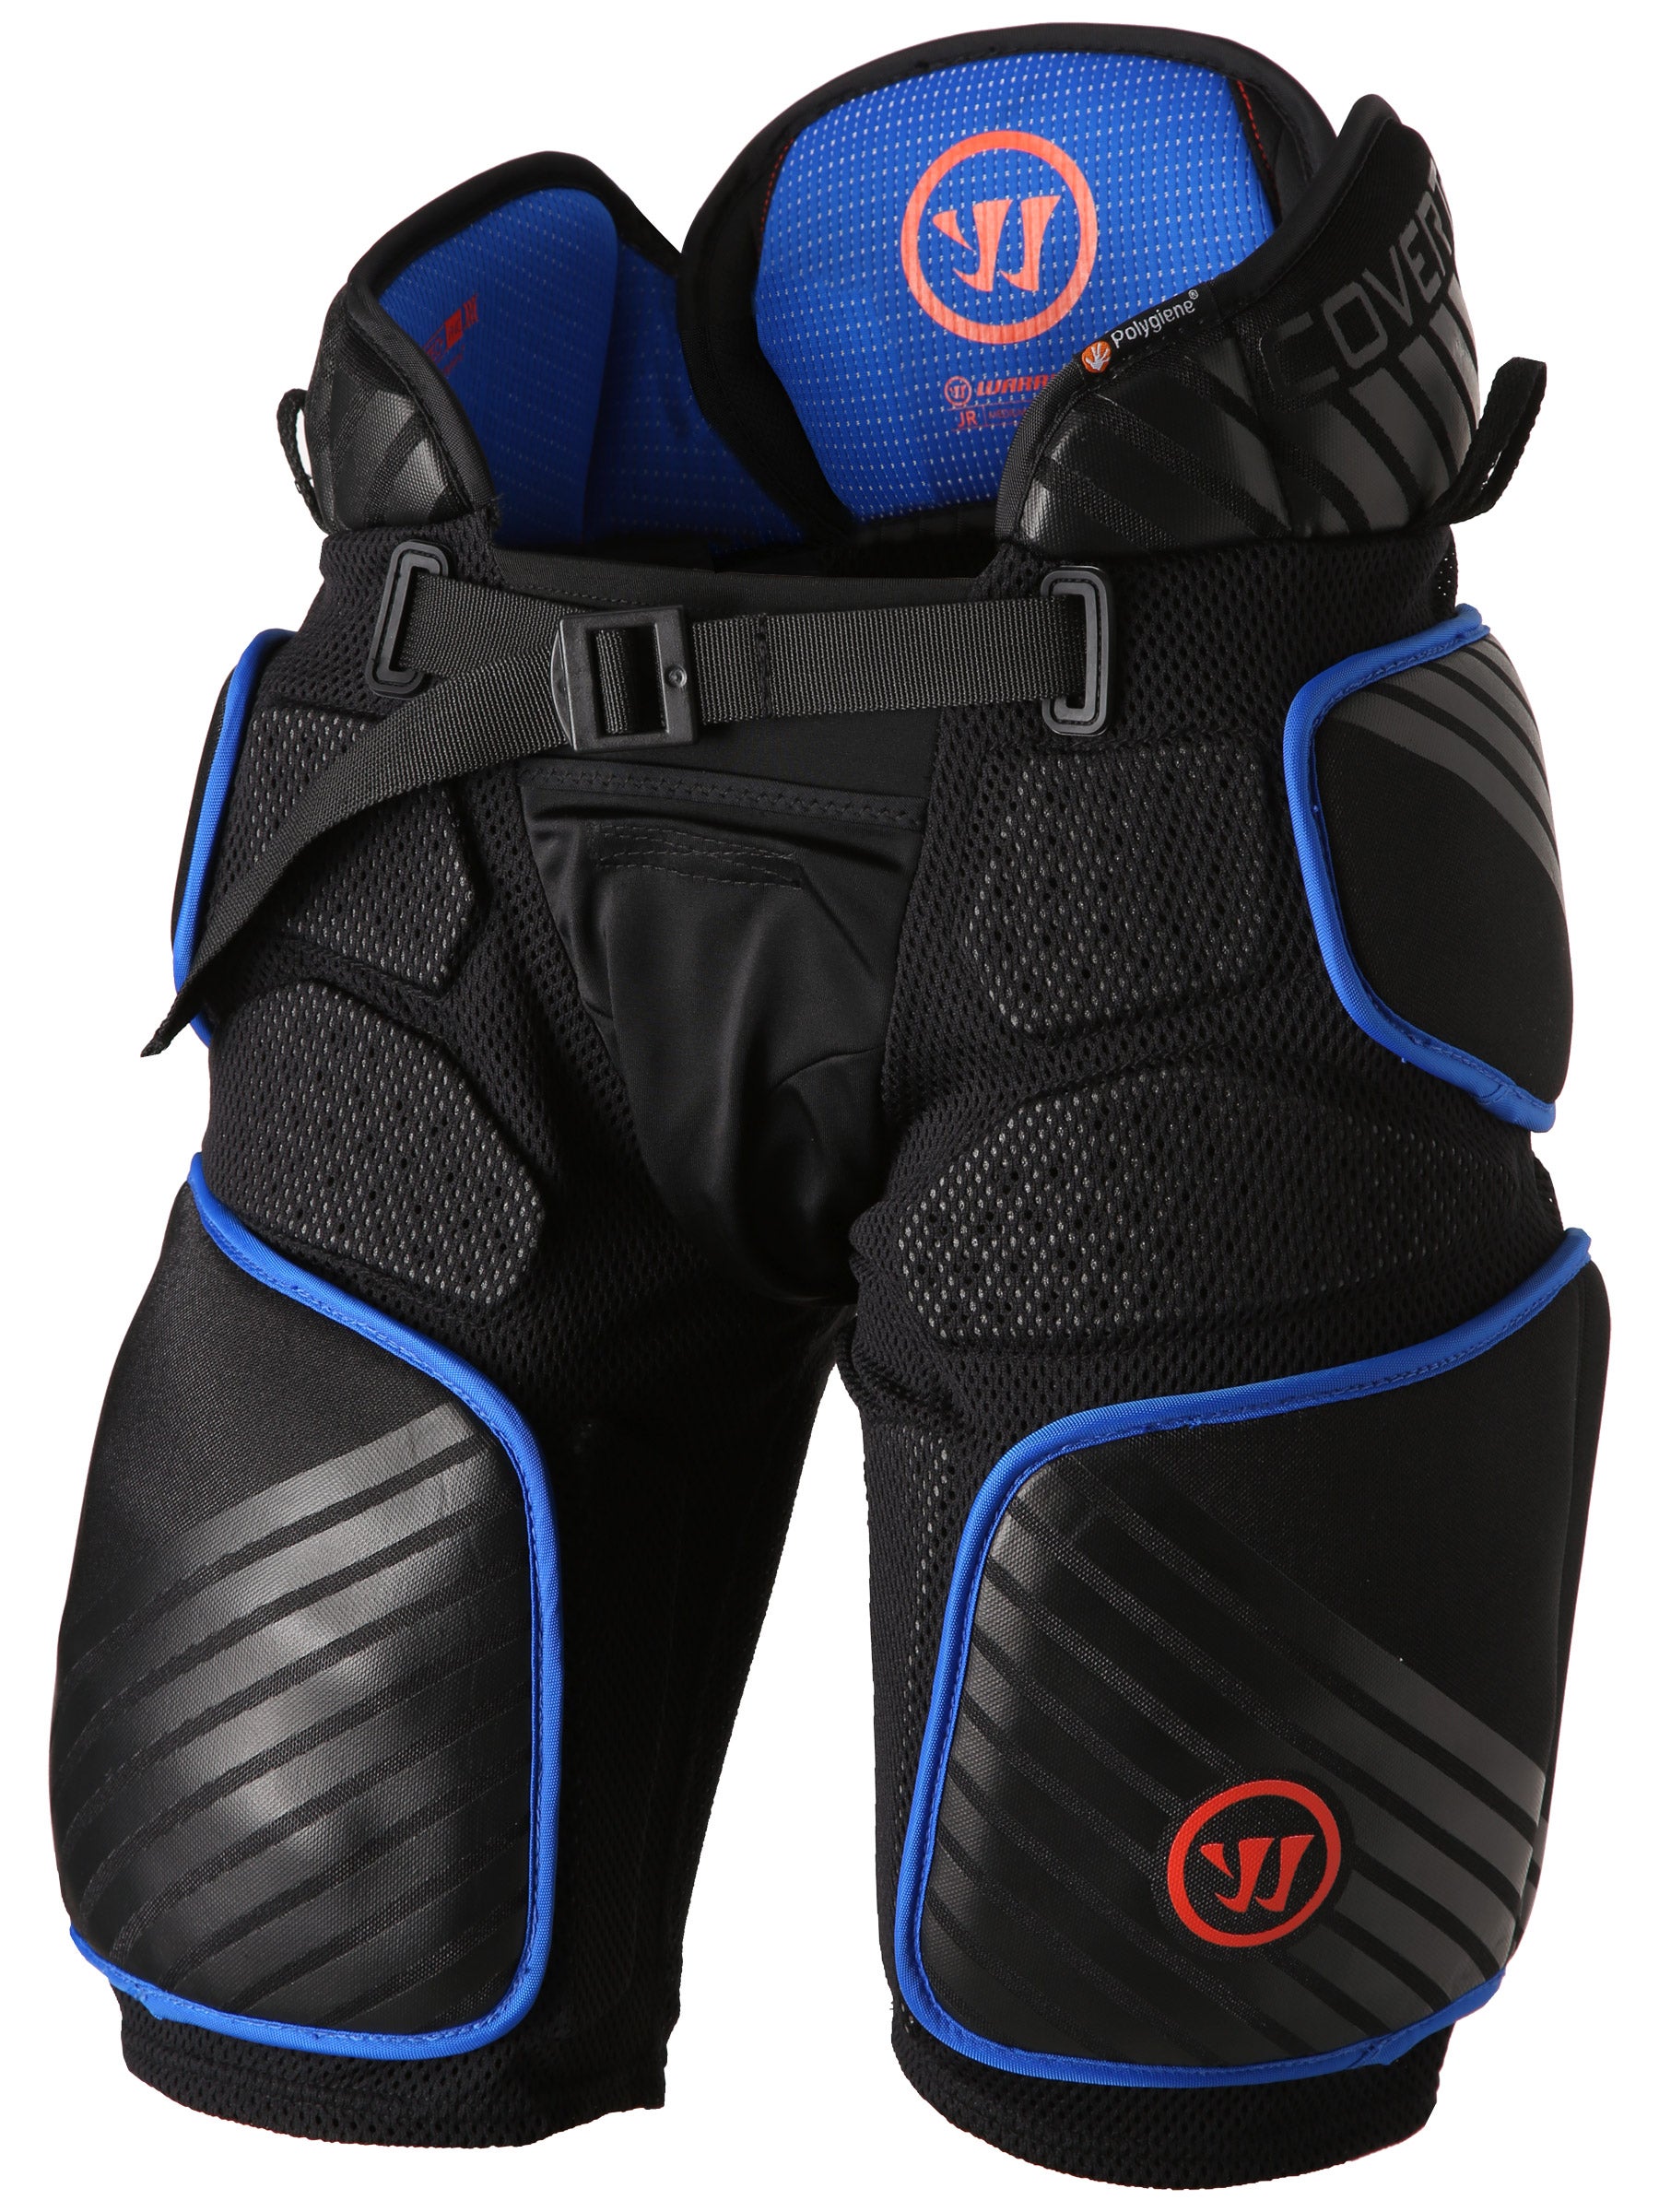 New Warrior Dynasty Junior Medium Ice/Inline Hockey Player Girdle equipment pant 